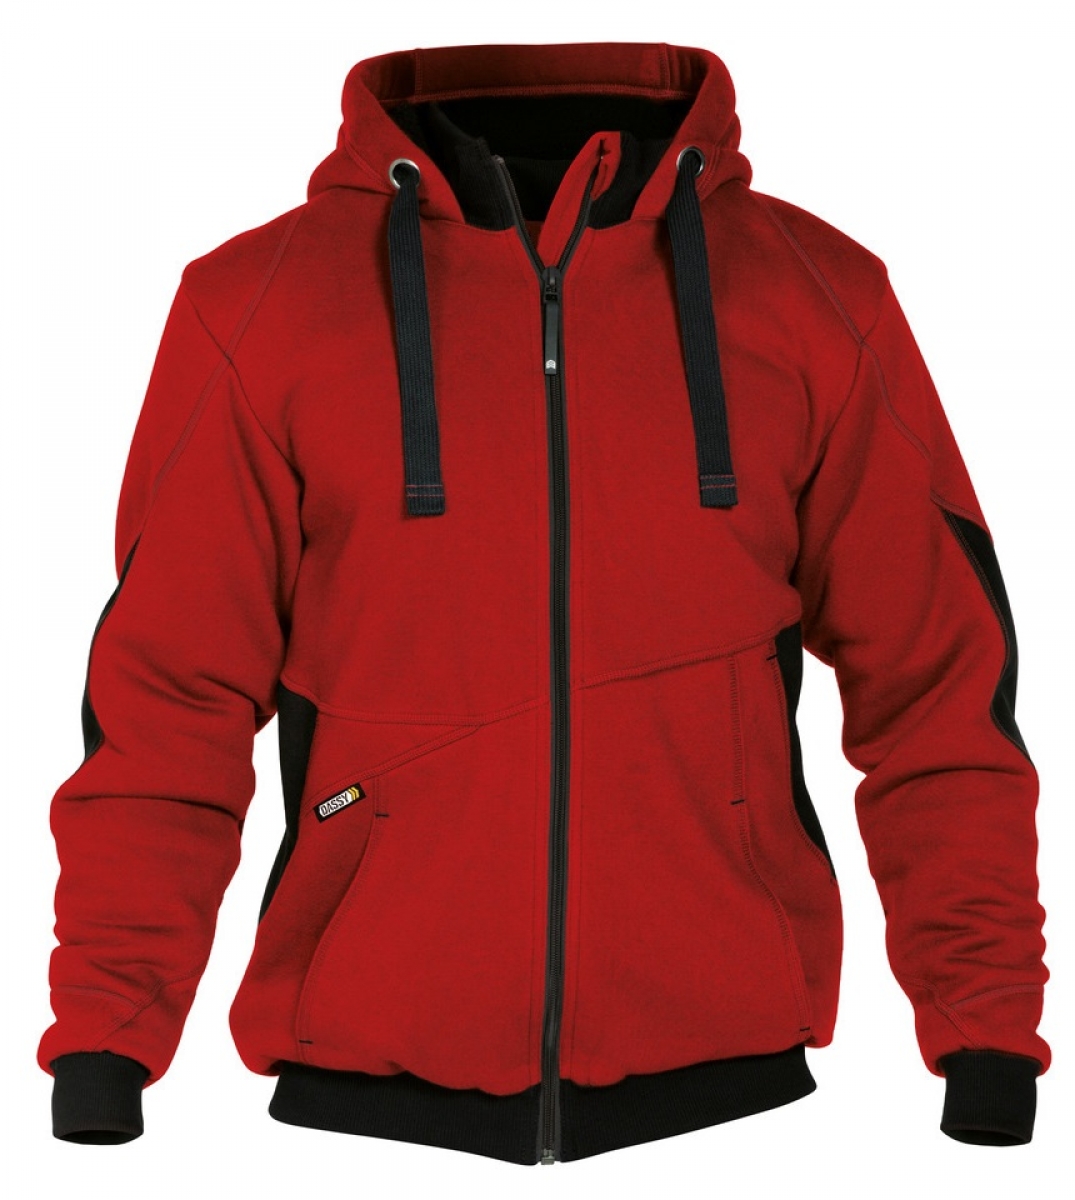 DASSY-Workwear, Sweatshirt-Jacke "PULSE", rot/schwarz